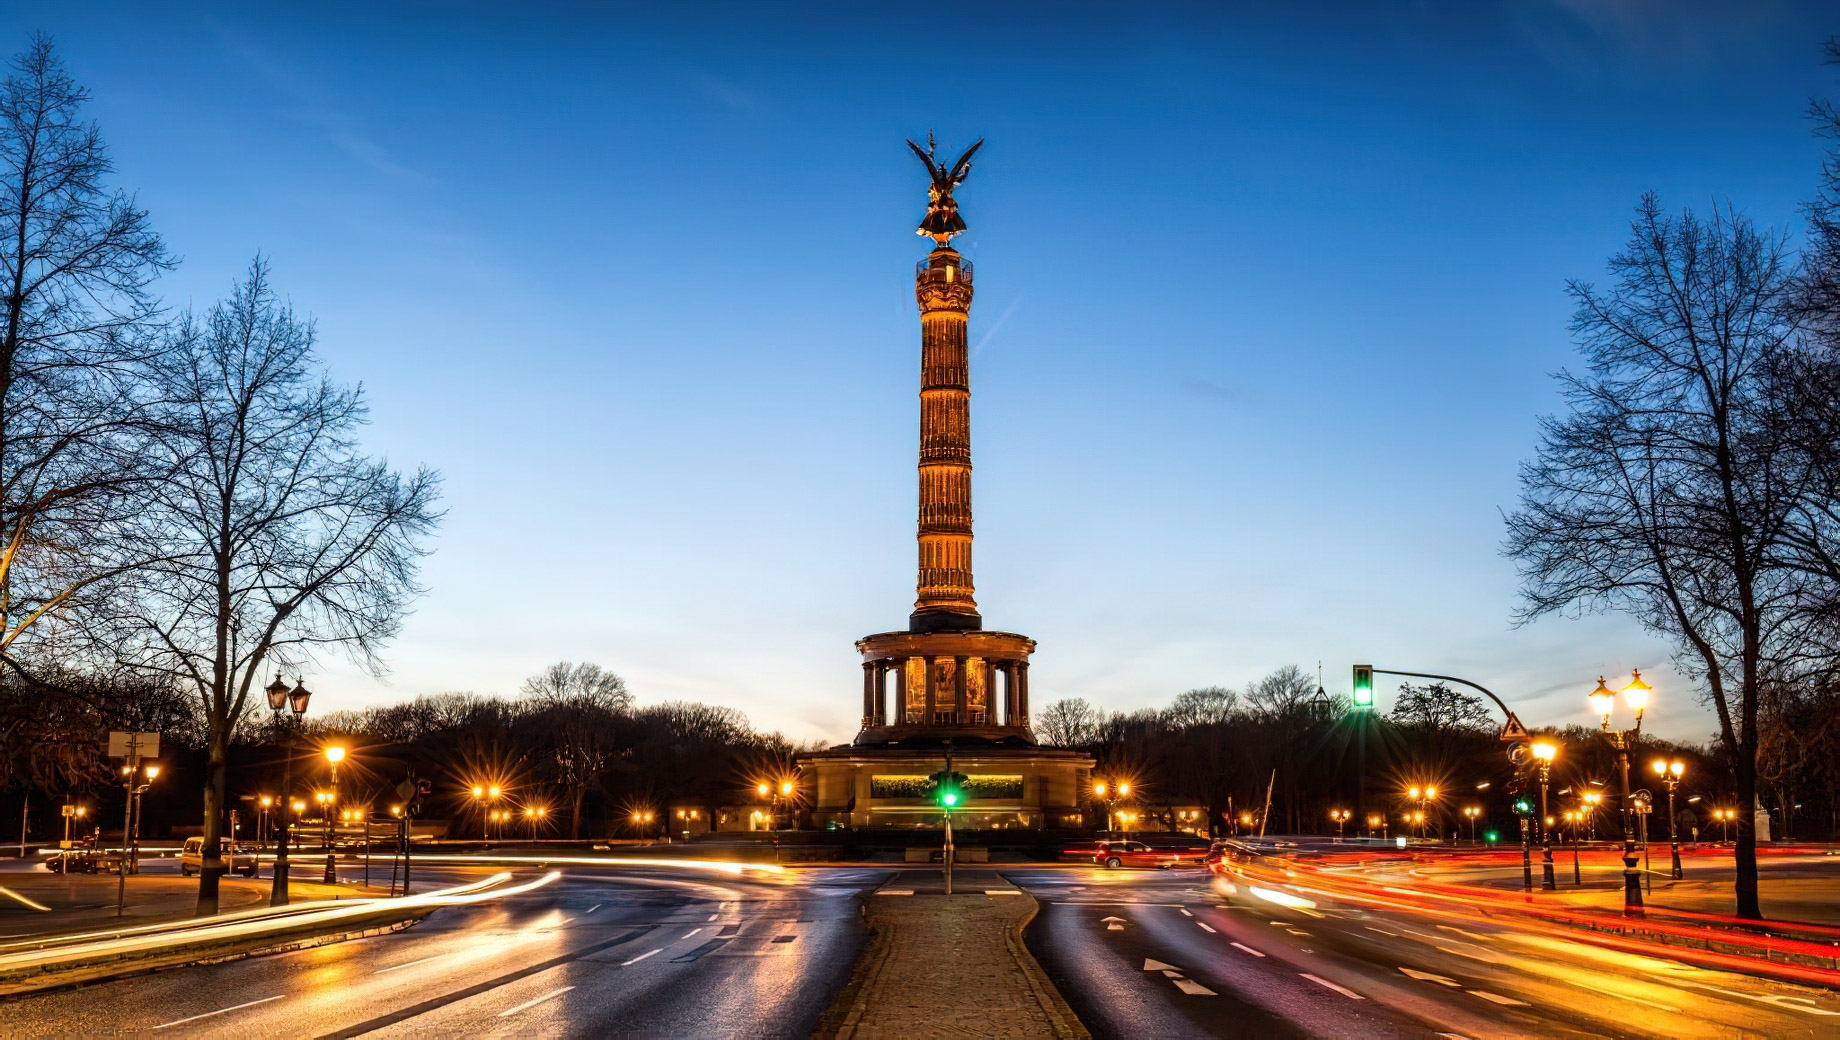 The Ritz-Carlton, Berlin Hotel – Berlin, Germany – The Victory Column